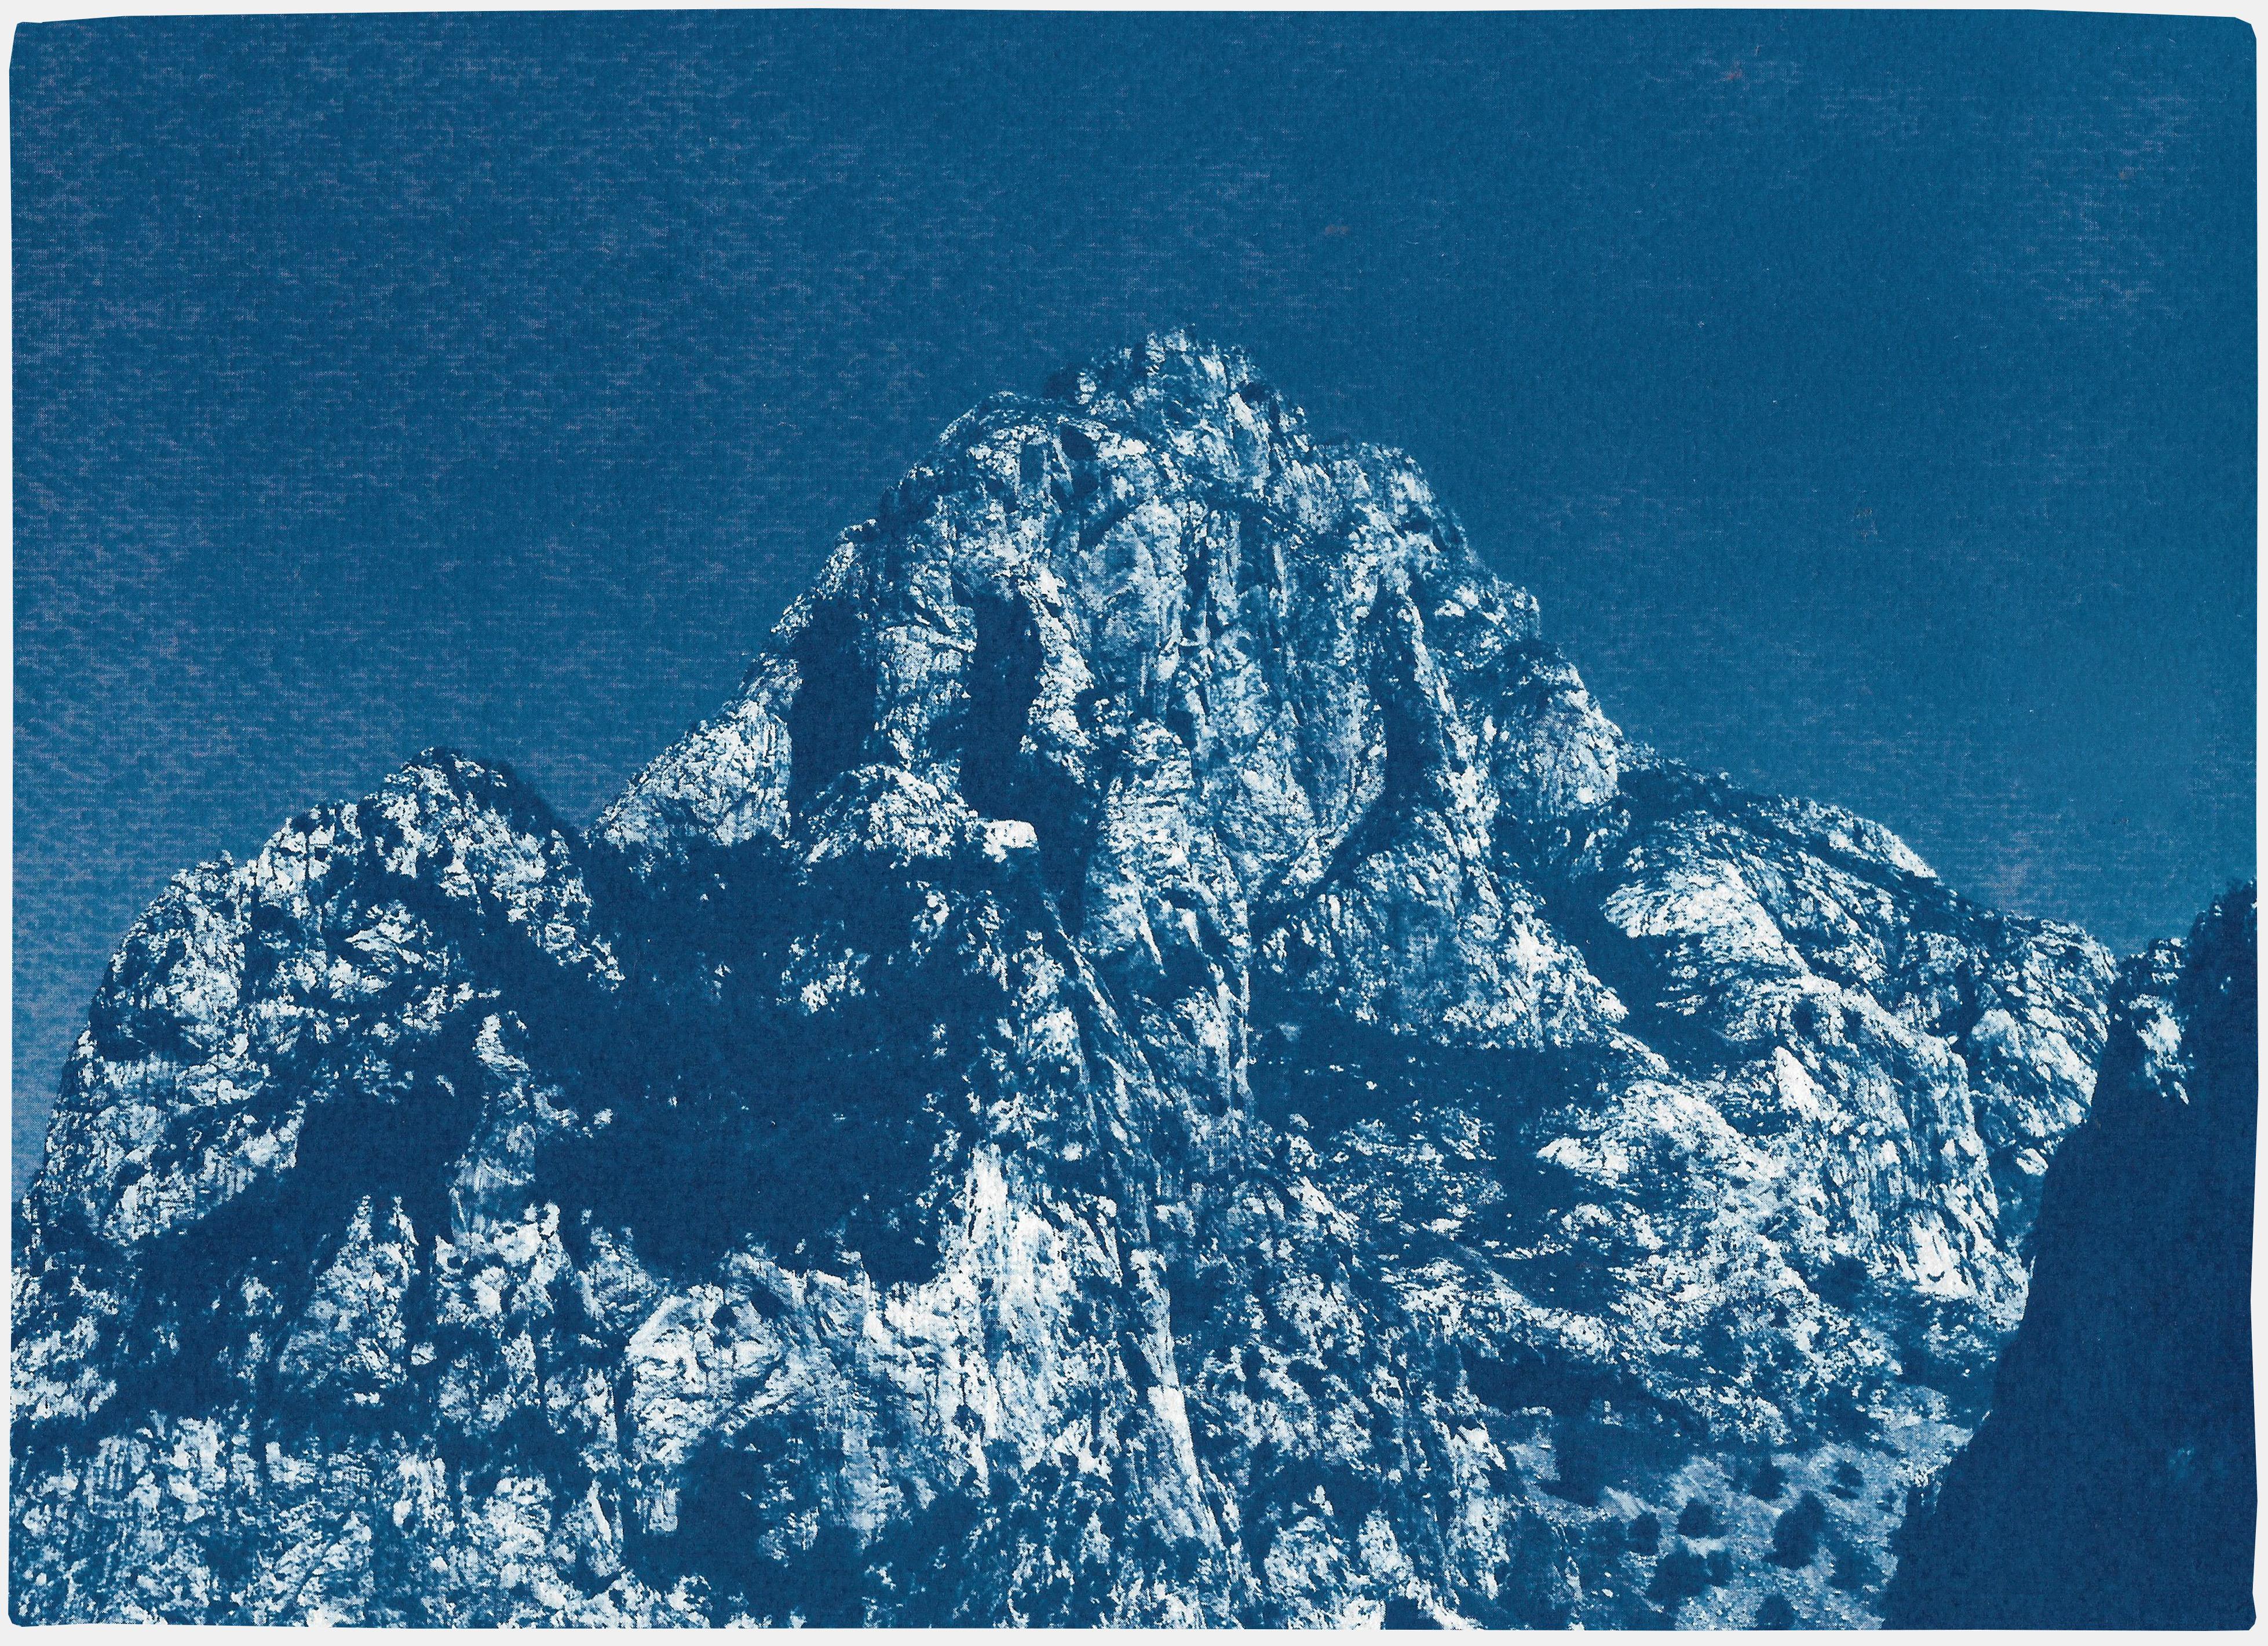 Kind of Cyan Landscape Photograph - Yosemite Blue Mountain, Cyanotype on Watercolor Paper, Landscape in Indigo